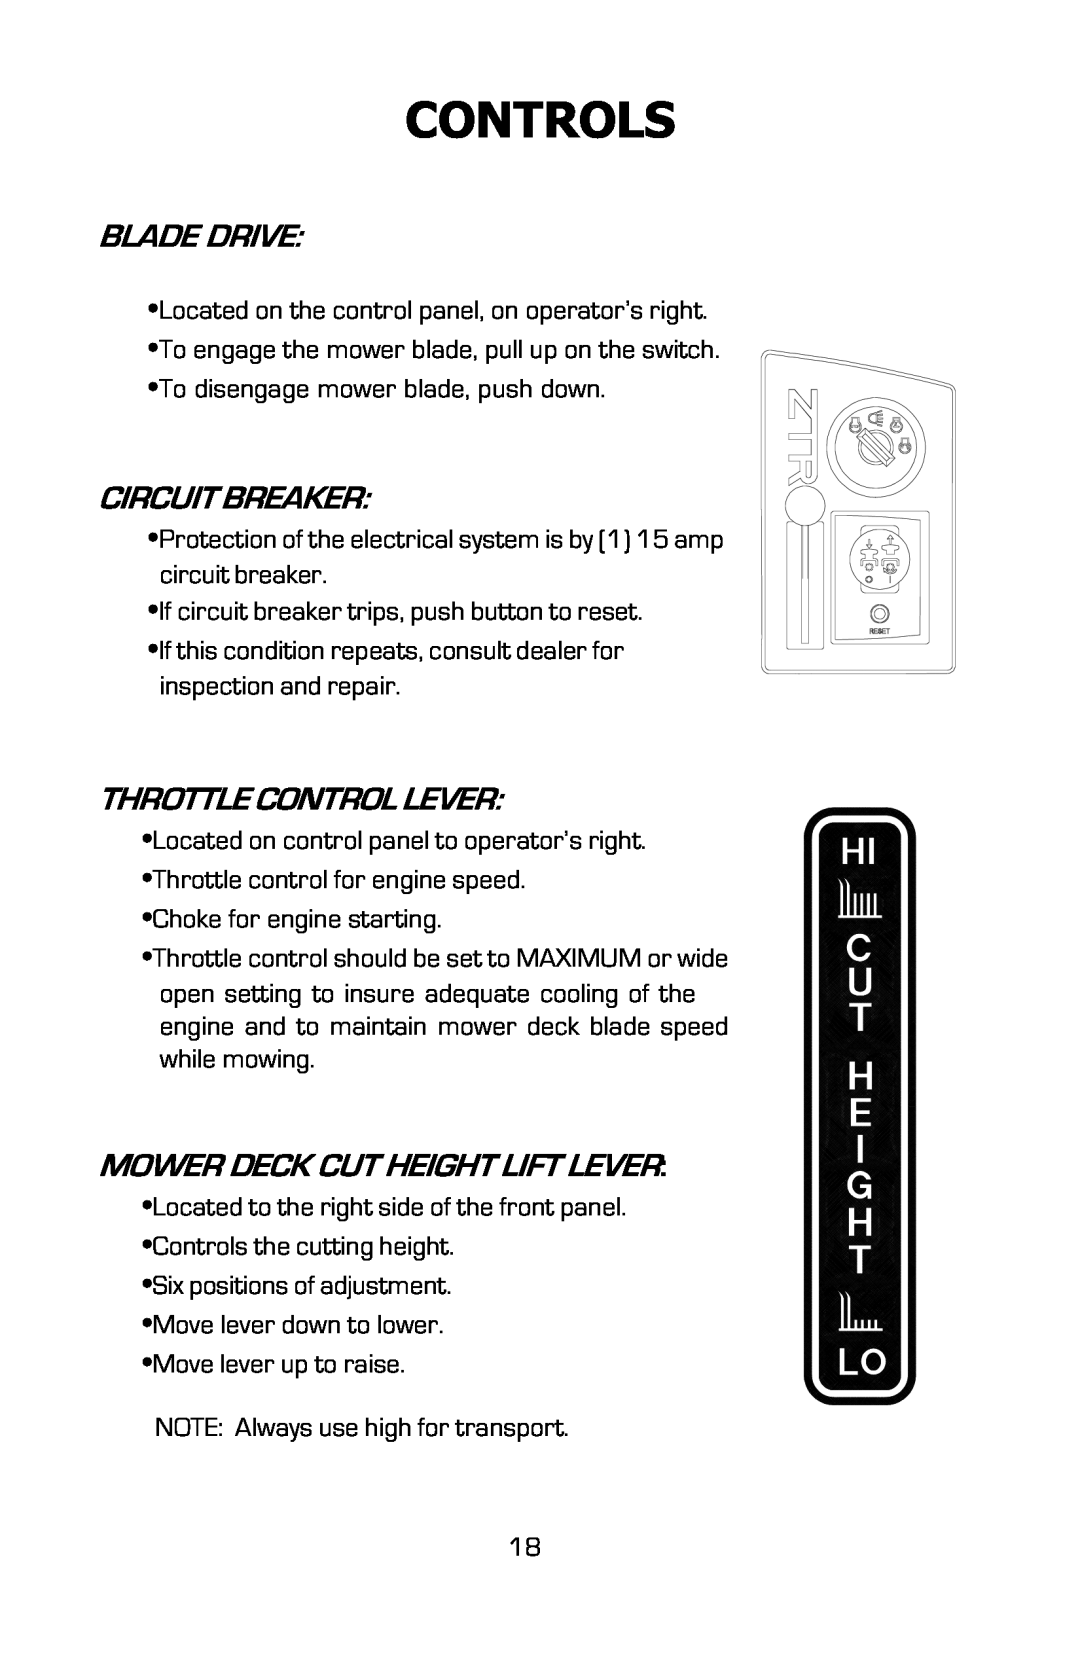 Dixon 16134-0803 manual Controls, Blade Drive, Circuit Breaker, Throttle Control Lever, Mower Deck Cut Height Lift Lever 